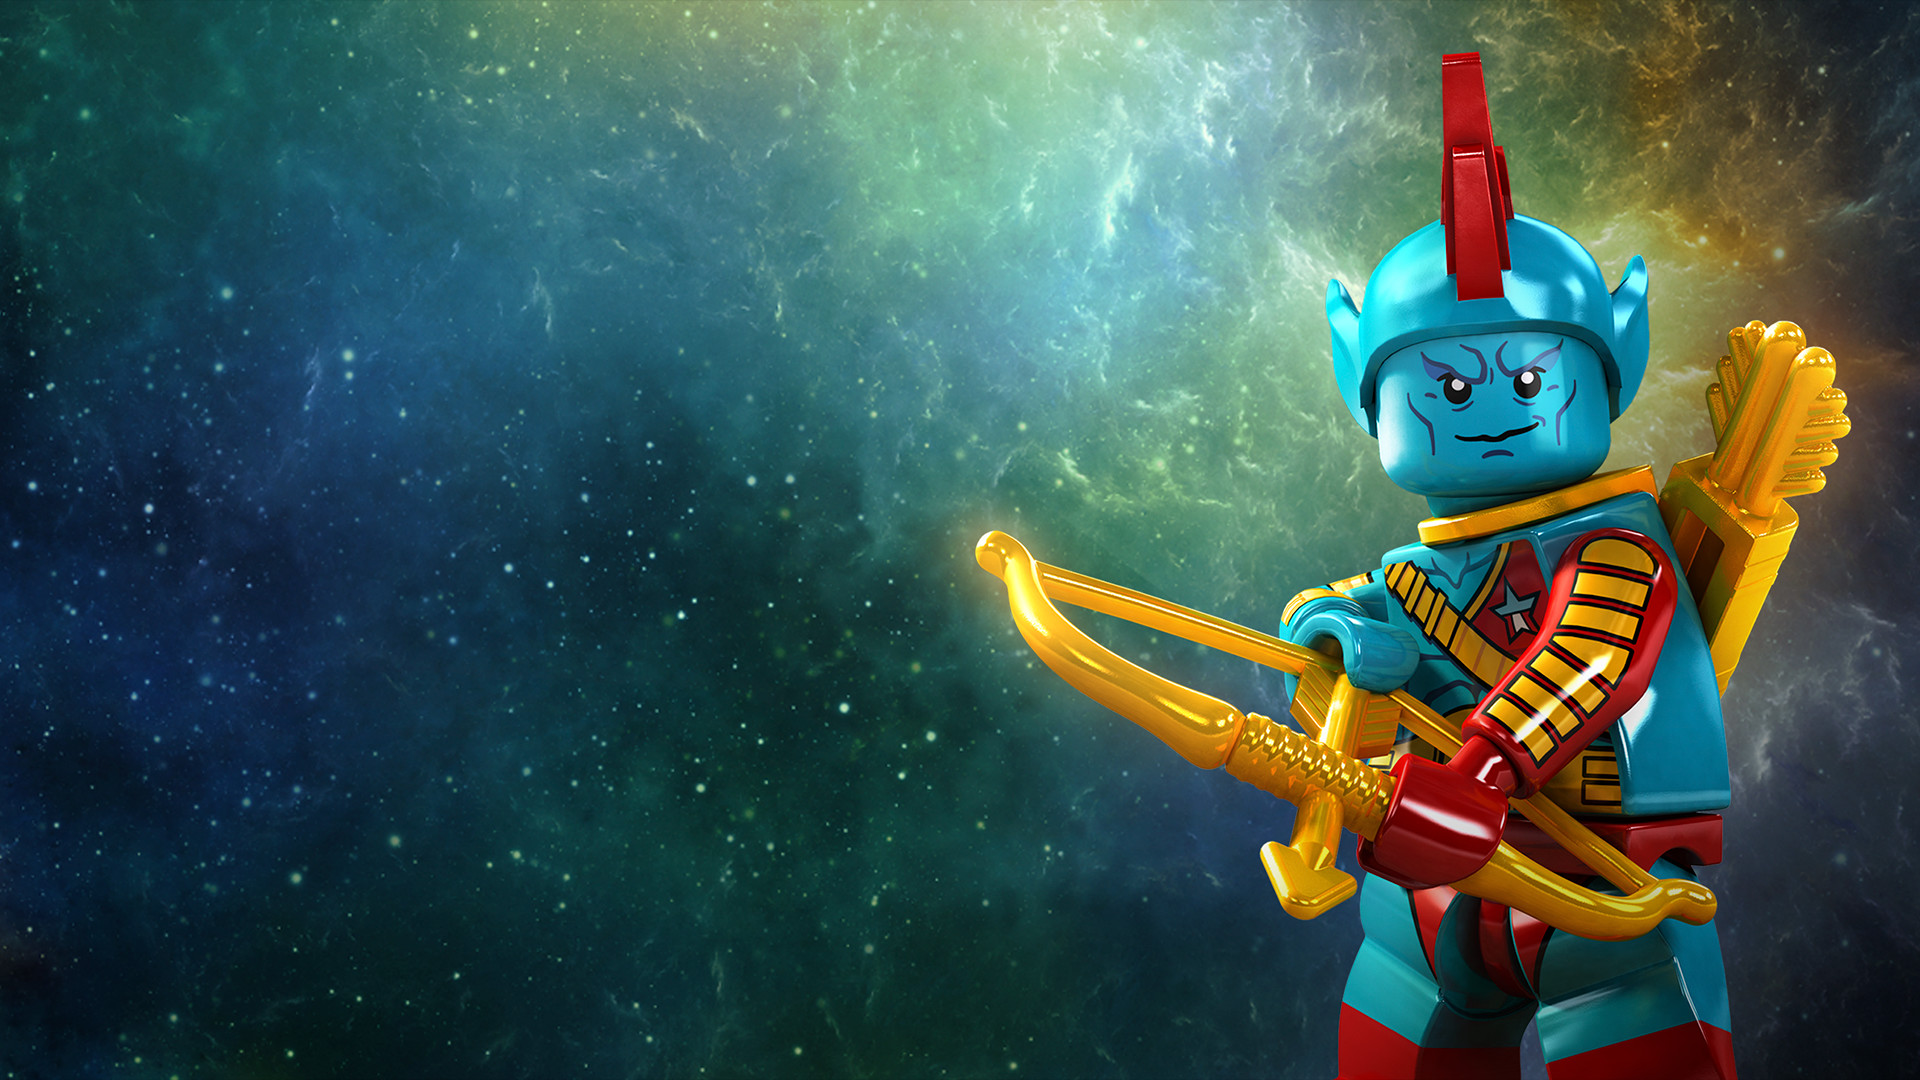 LEGO Marvel Super Heroes 2 - Classic Guardians Of The Galaxy Character Pack DLC EU PS4 CD Key